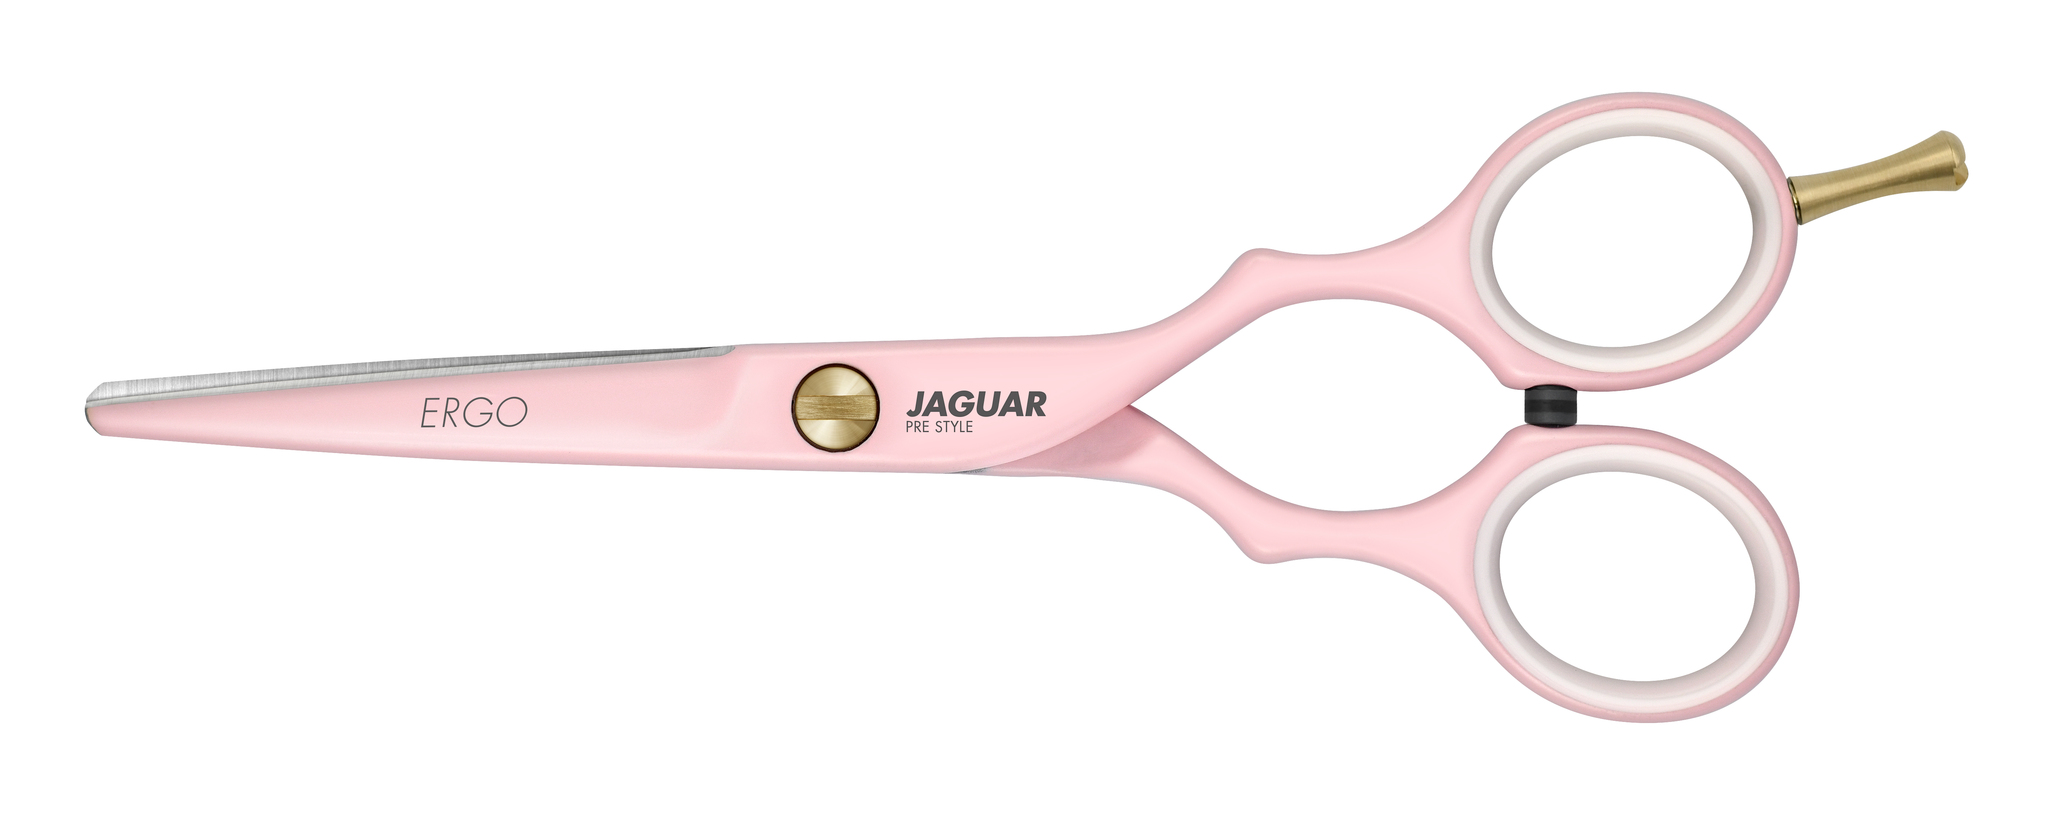 jaguar Pre Style Ergo Pink